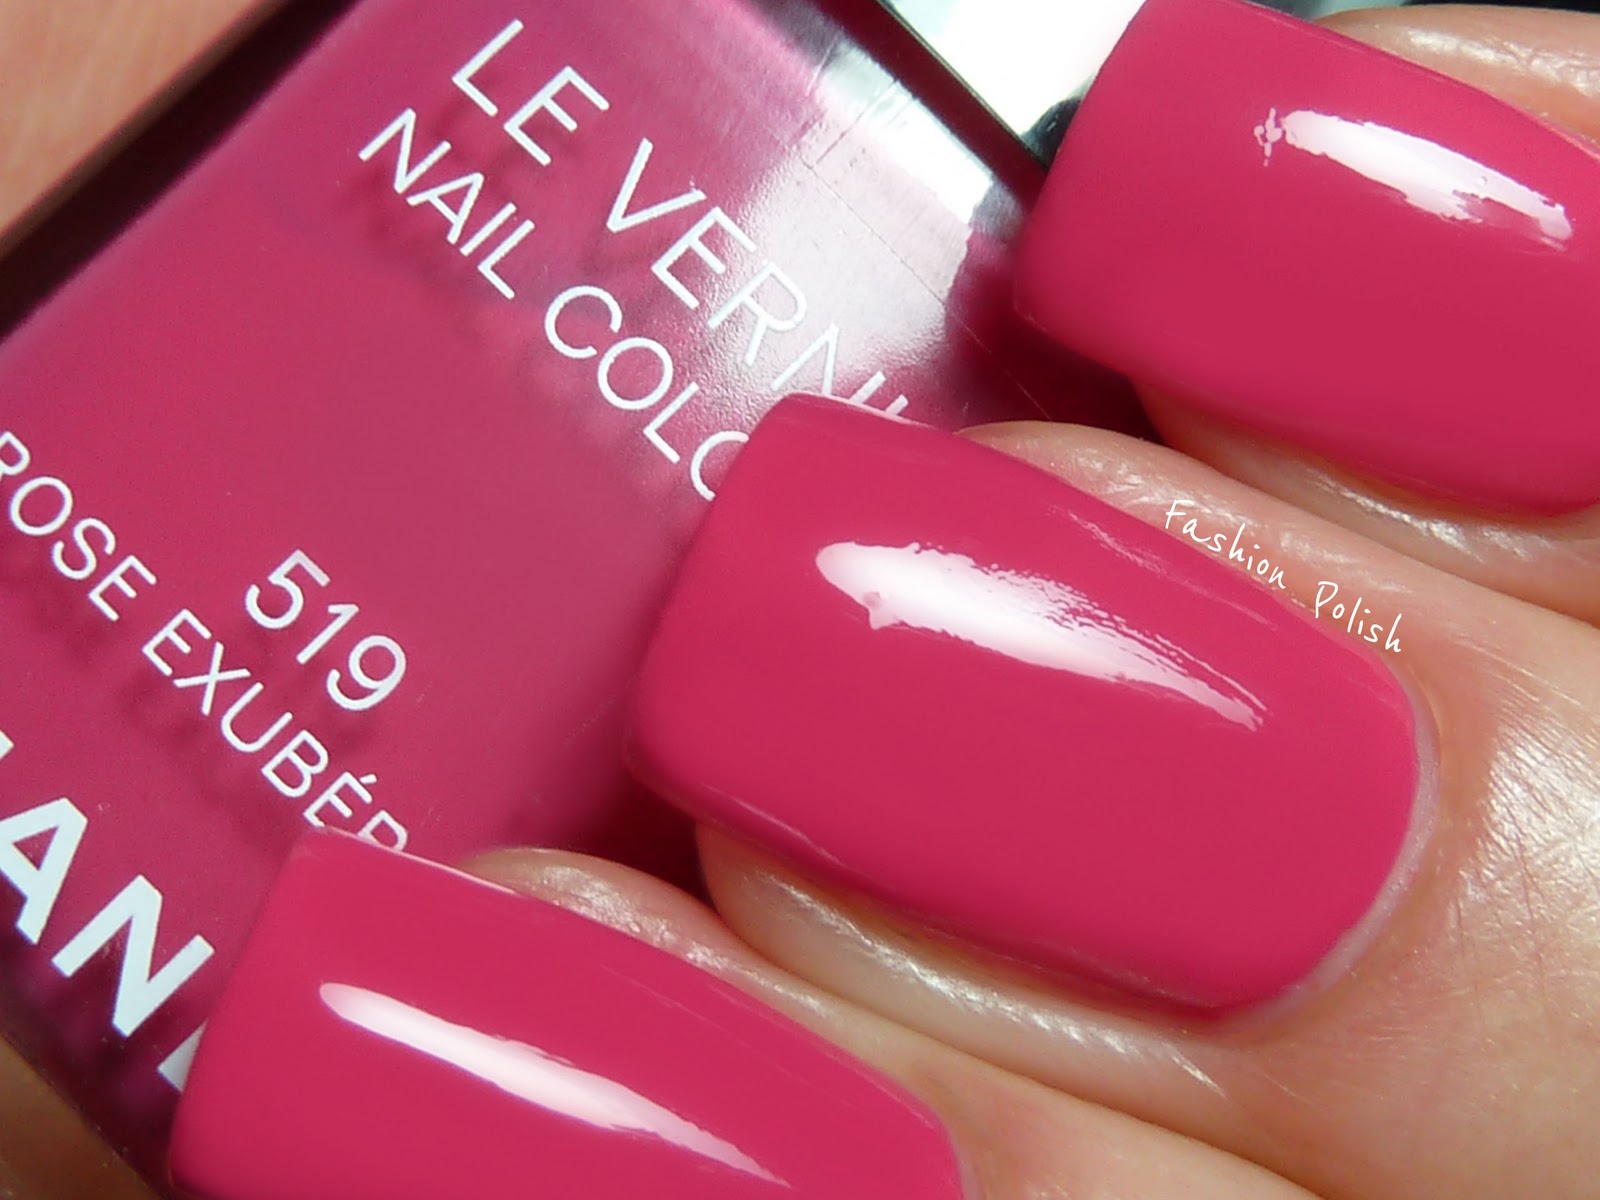 Chanel Le Vernis Longwear Nail Colour in Rose Exuberant - wide 2